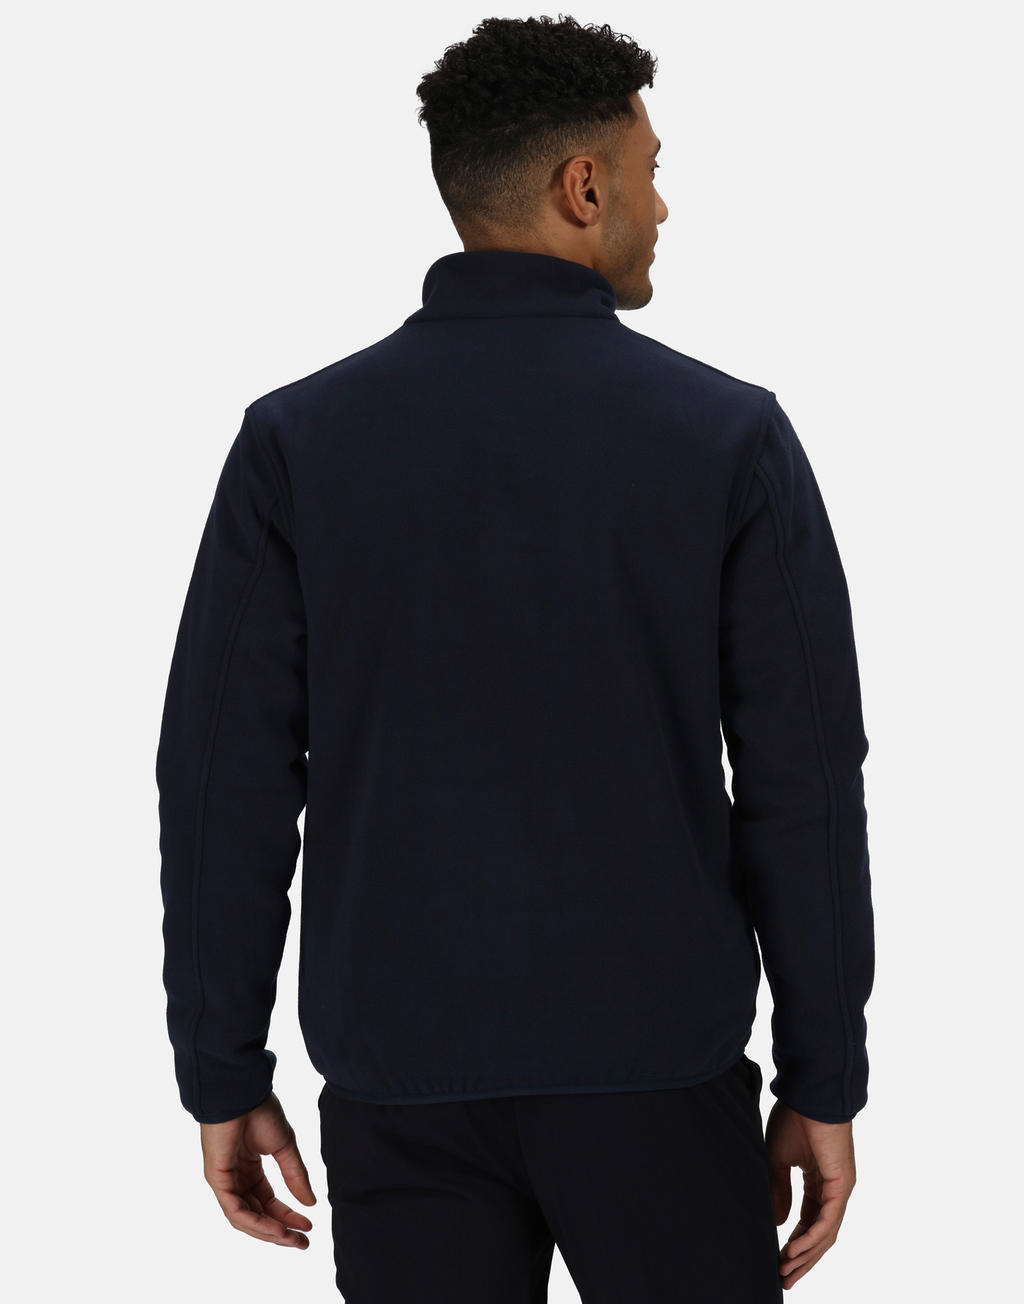  Omicron III Fleece Jacket in Farbe Black